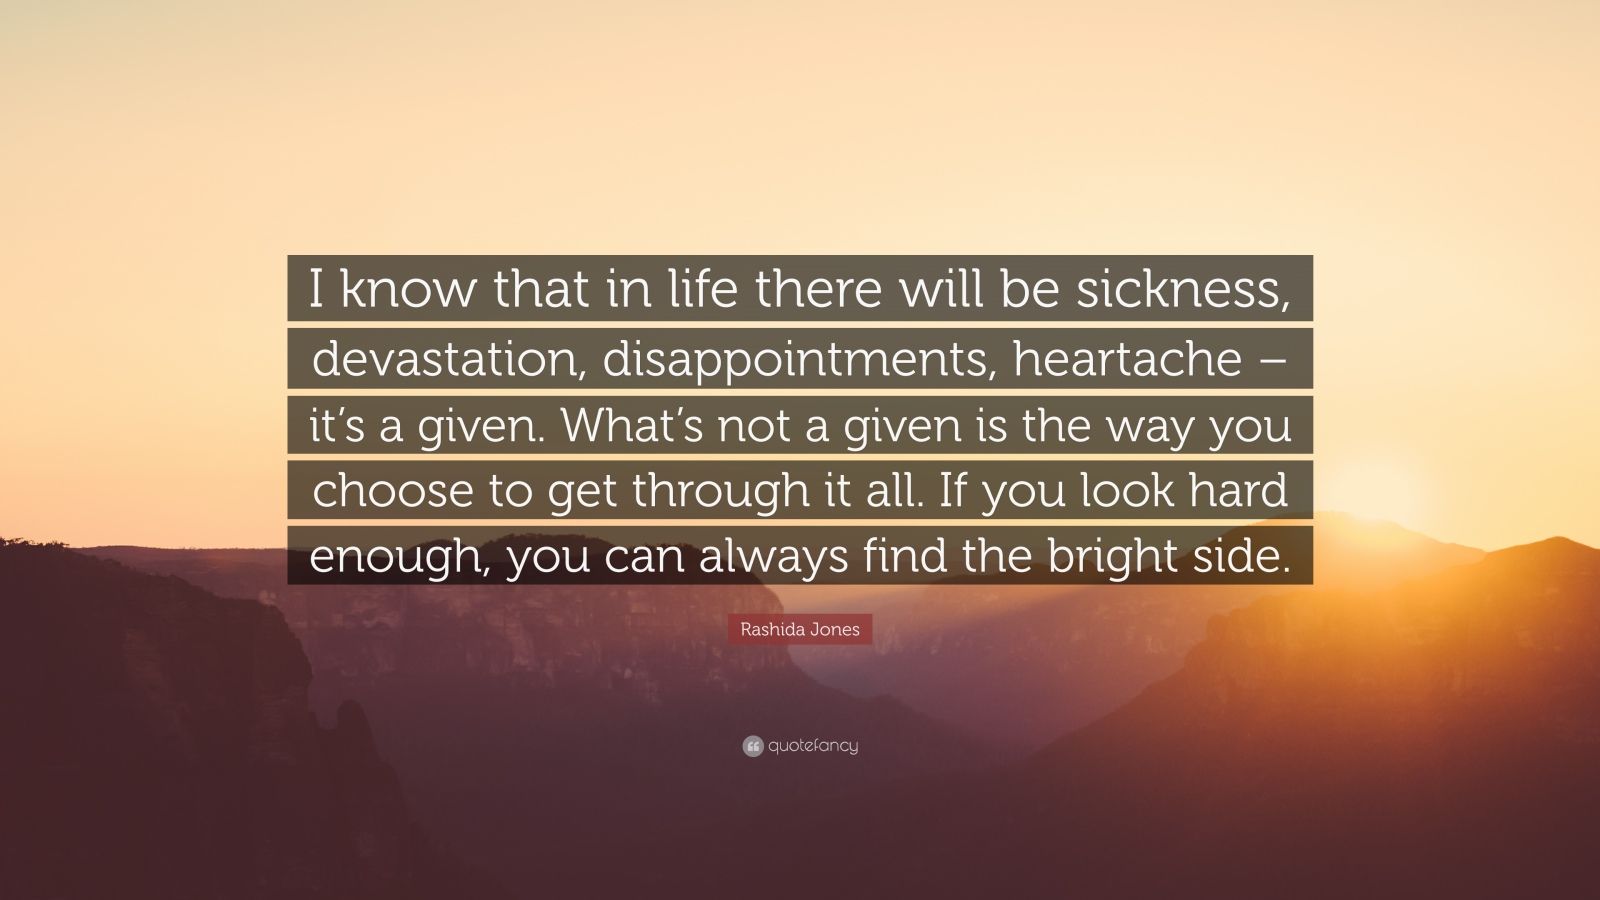 Rashida Jones Quote “I know that in life there will be sickness devastation